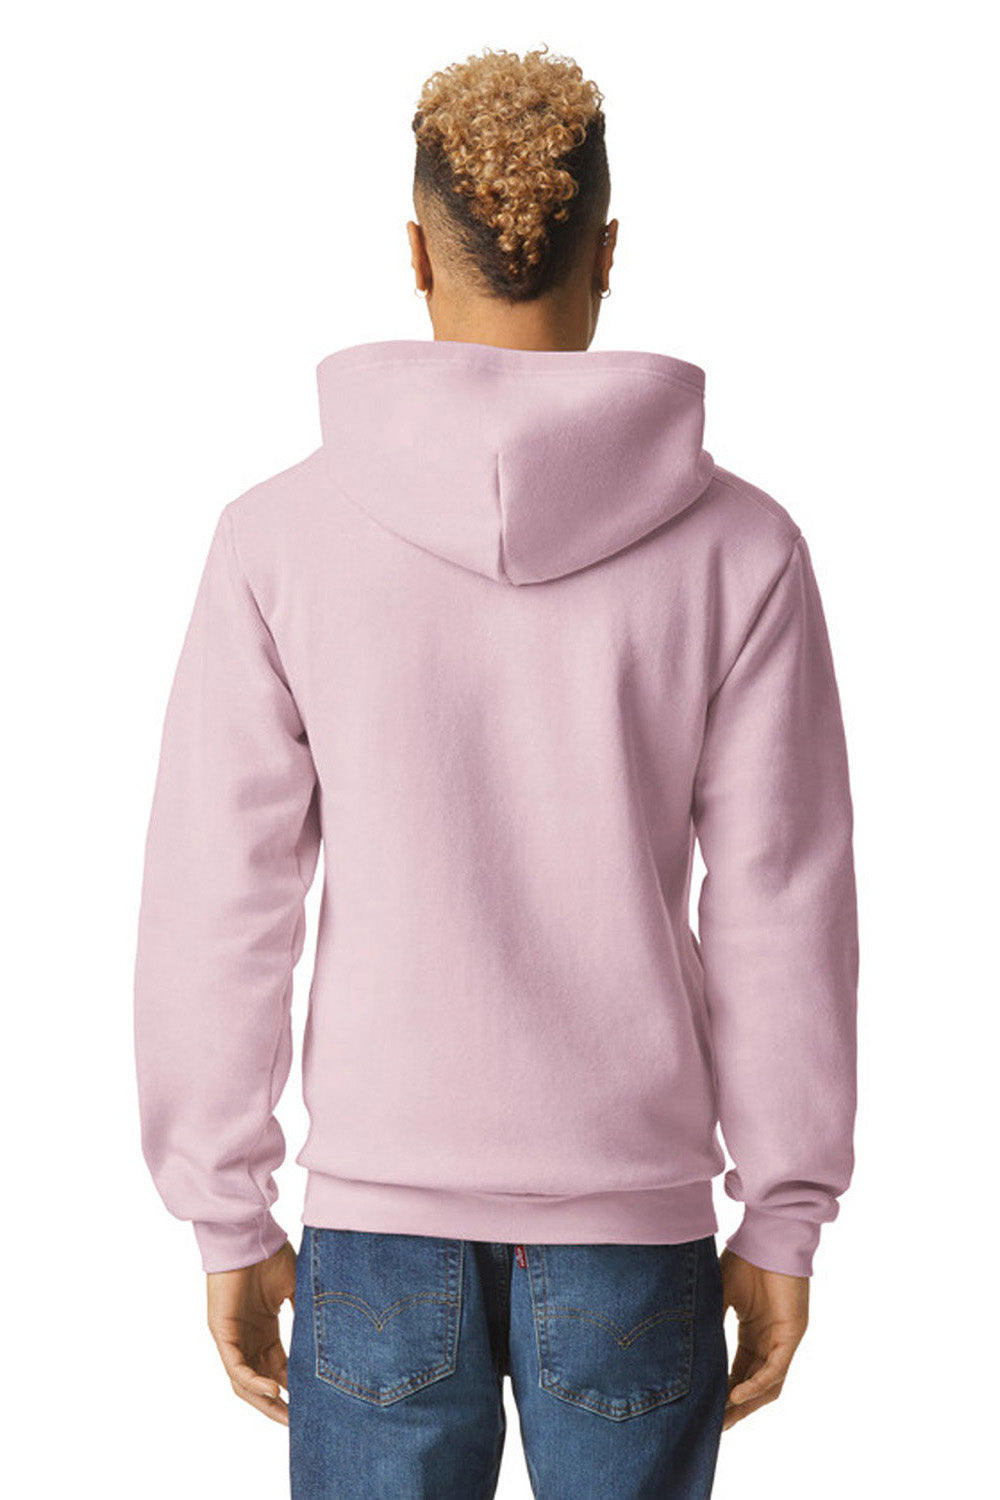 American Apparel RF497 Mens ReFlex Fleece Full Zip Hooded Sweatshirt Hoodie Blush Model Back